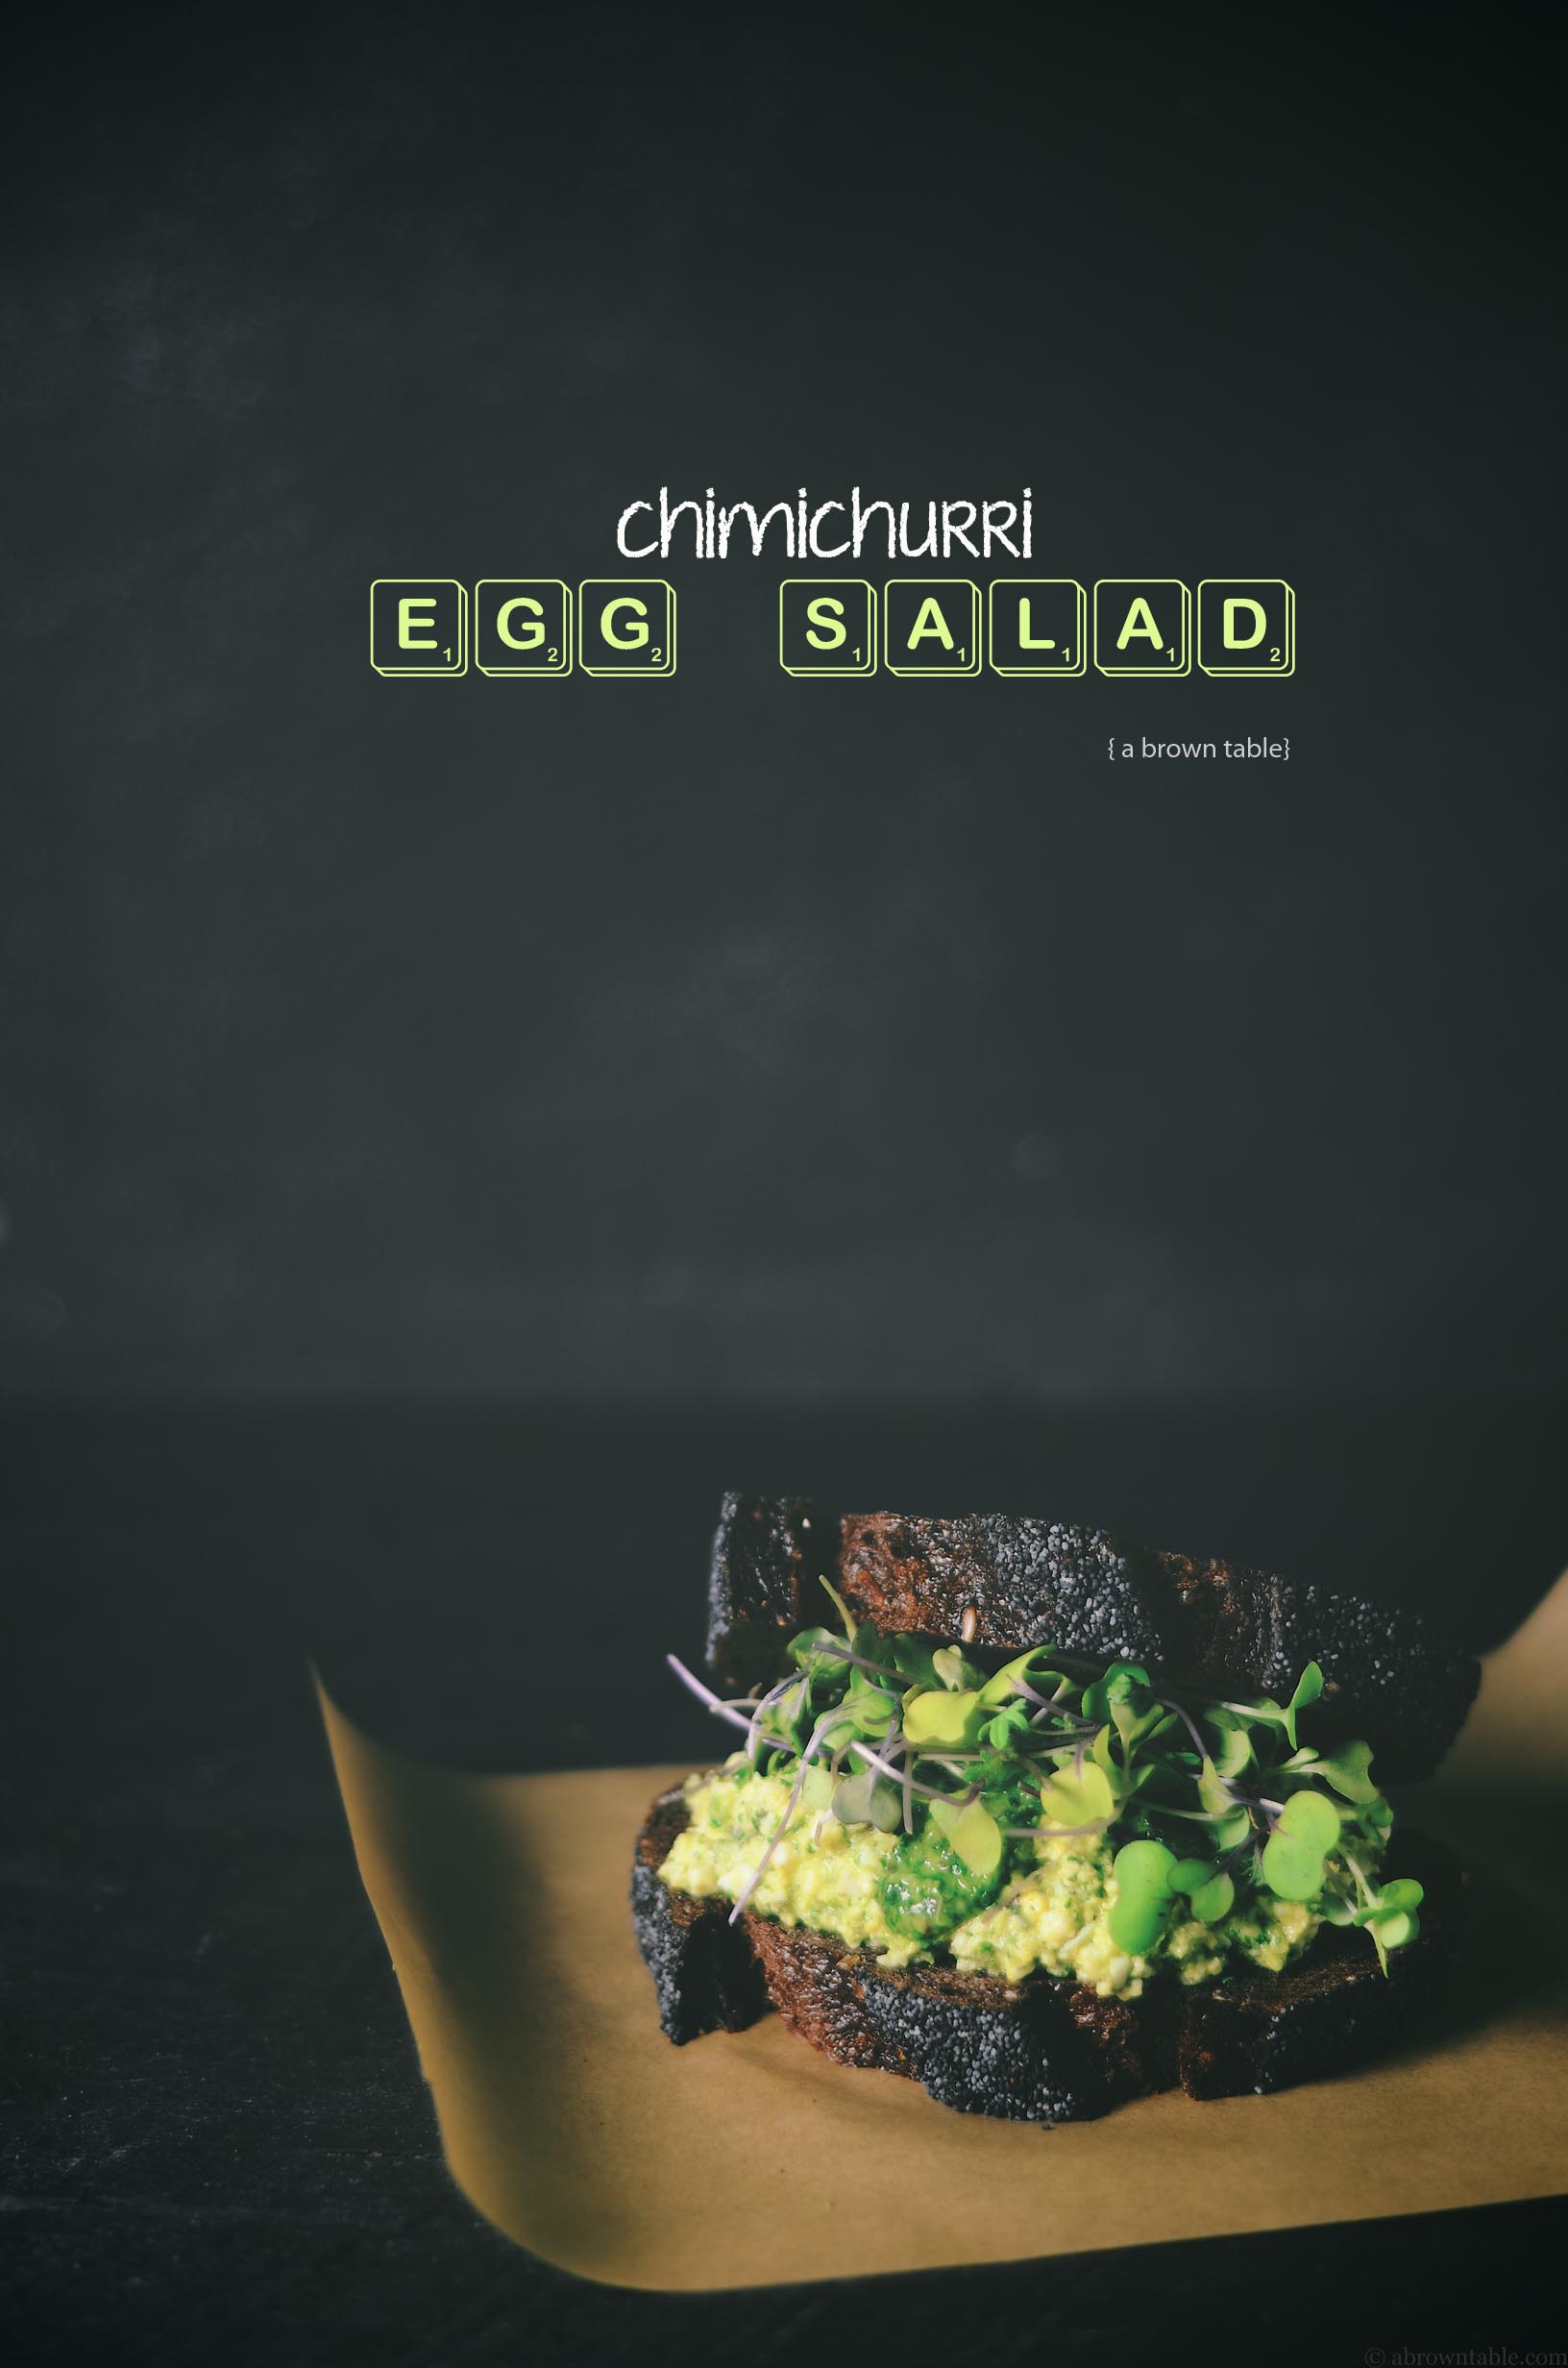 chimichurri egg salad